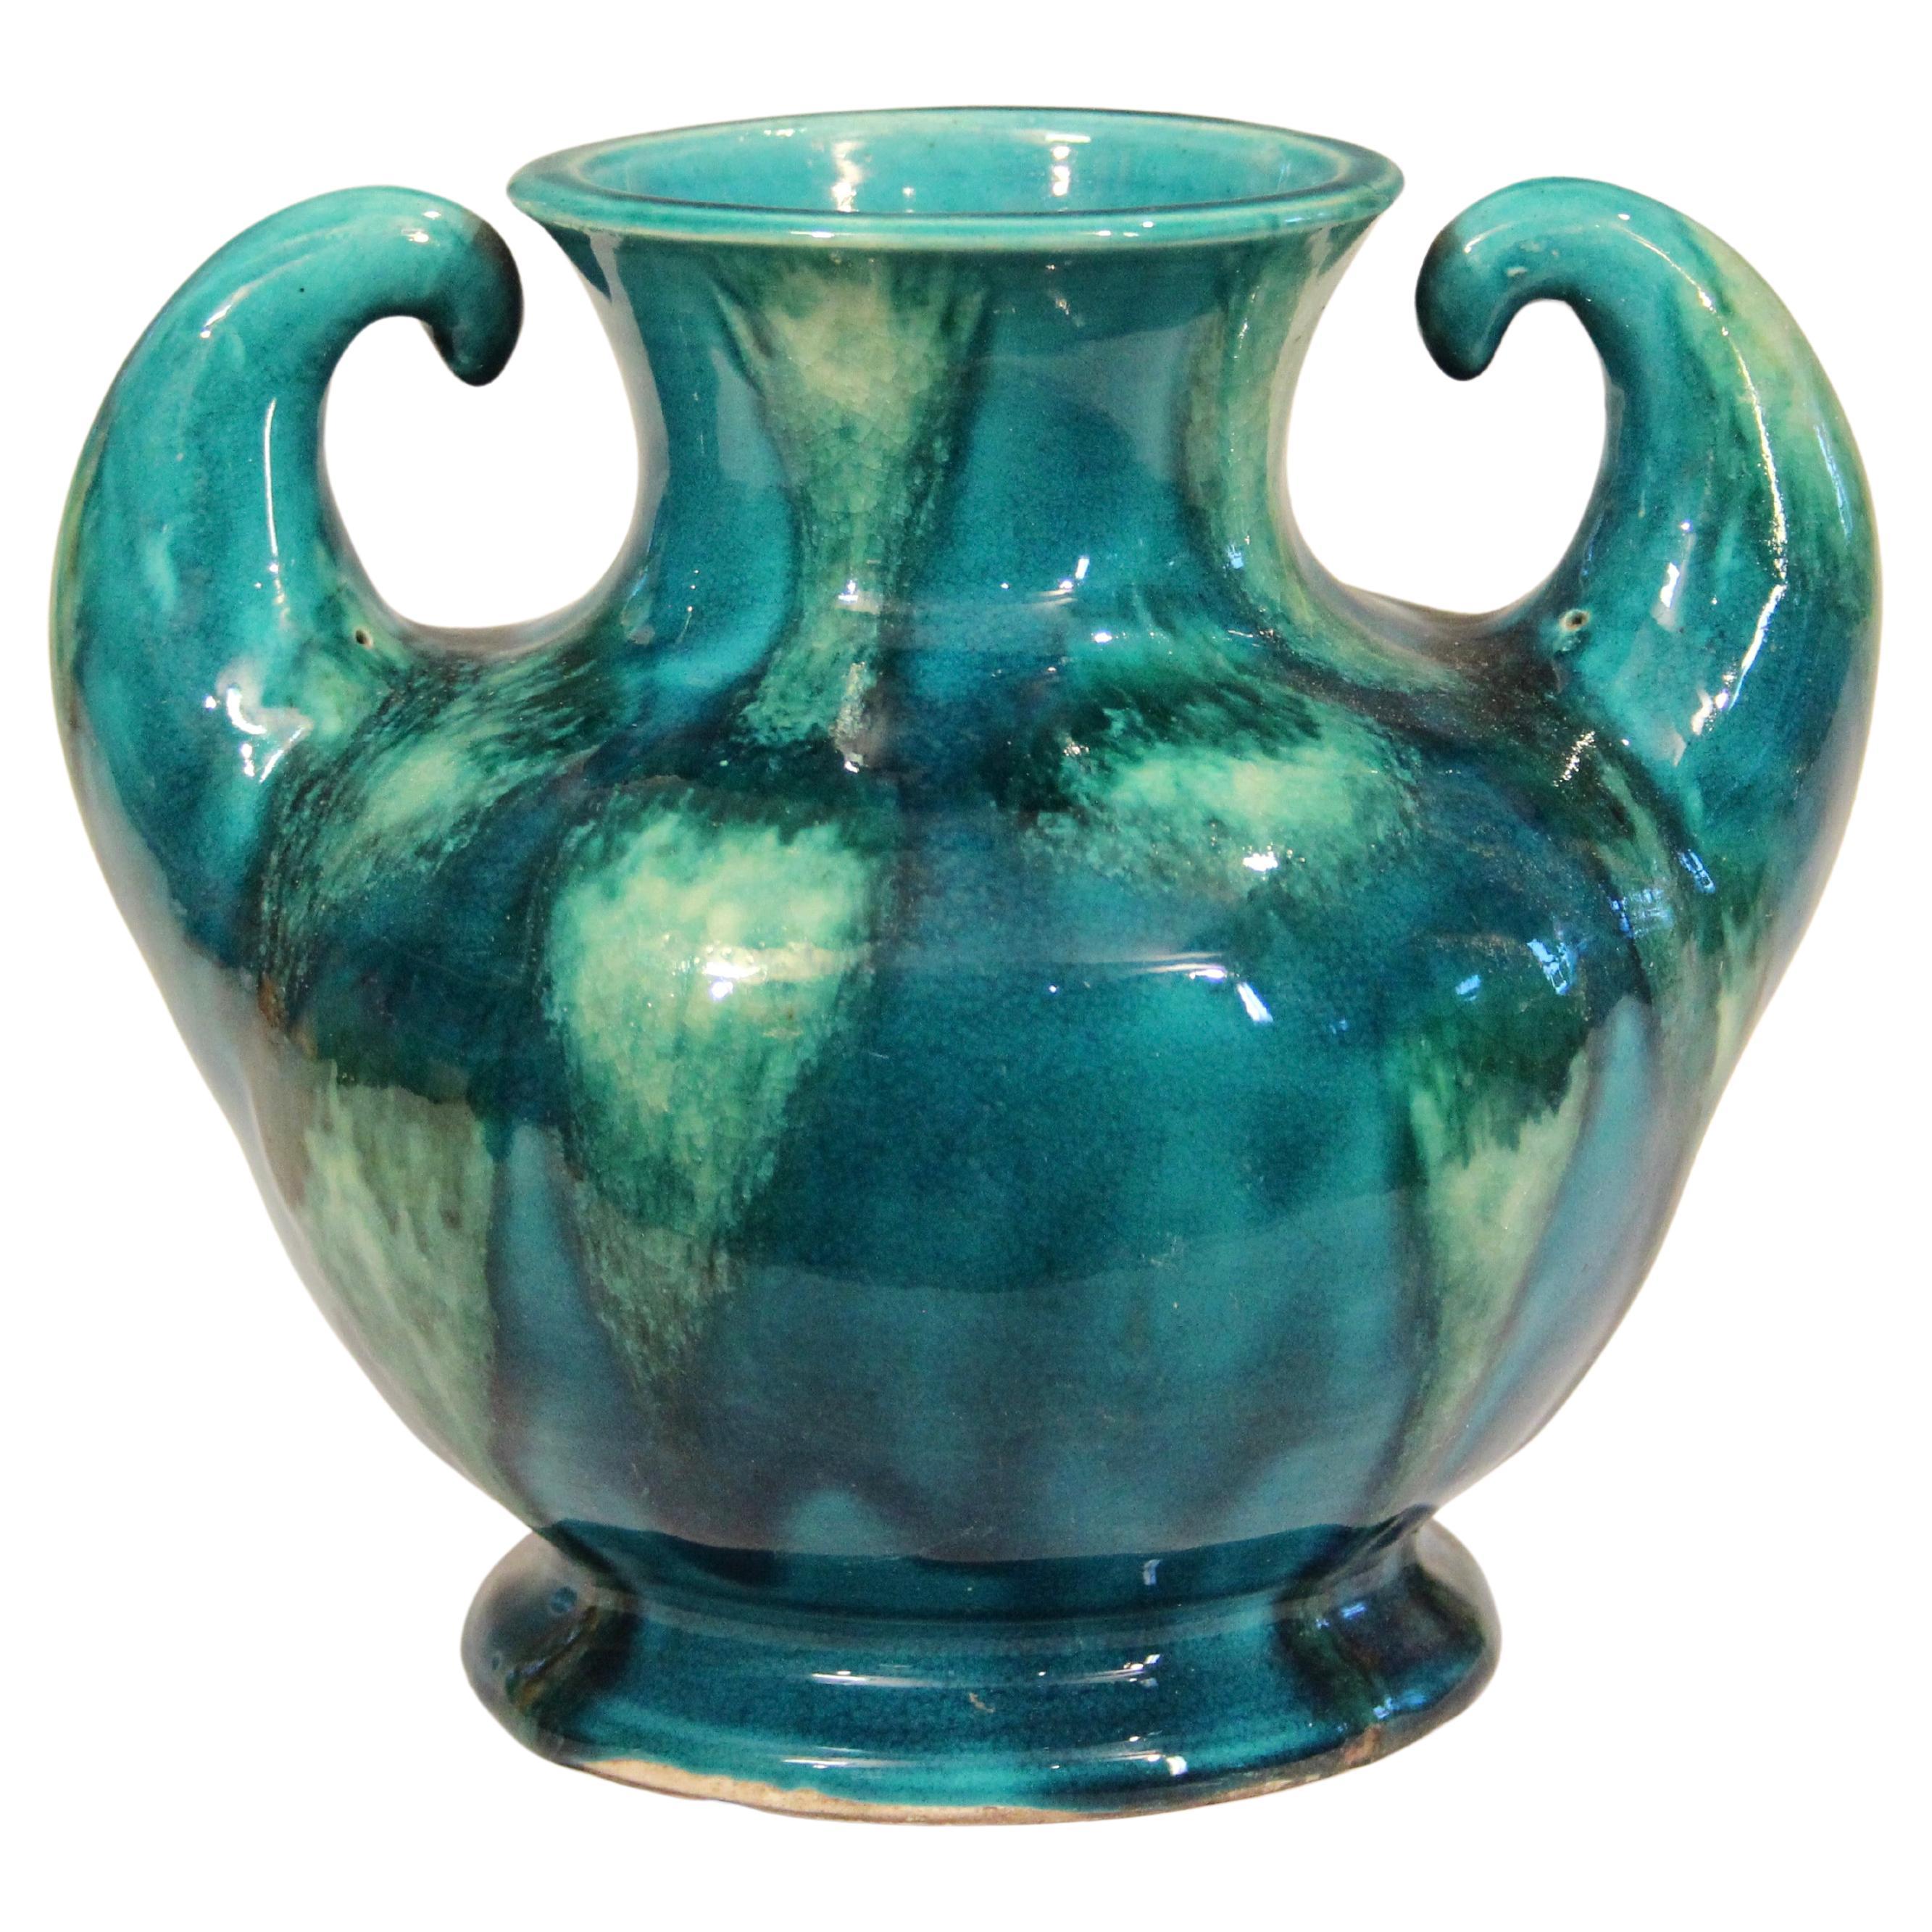 Awaji Pottery Art Deco Japanese Vintage Studio Muscle Vase Blue Green Flambe For Sale